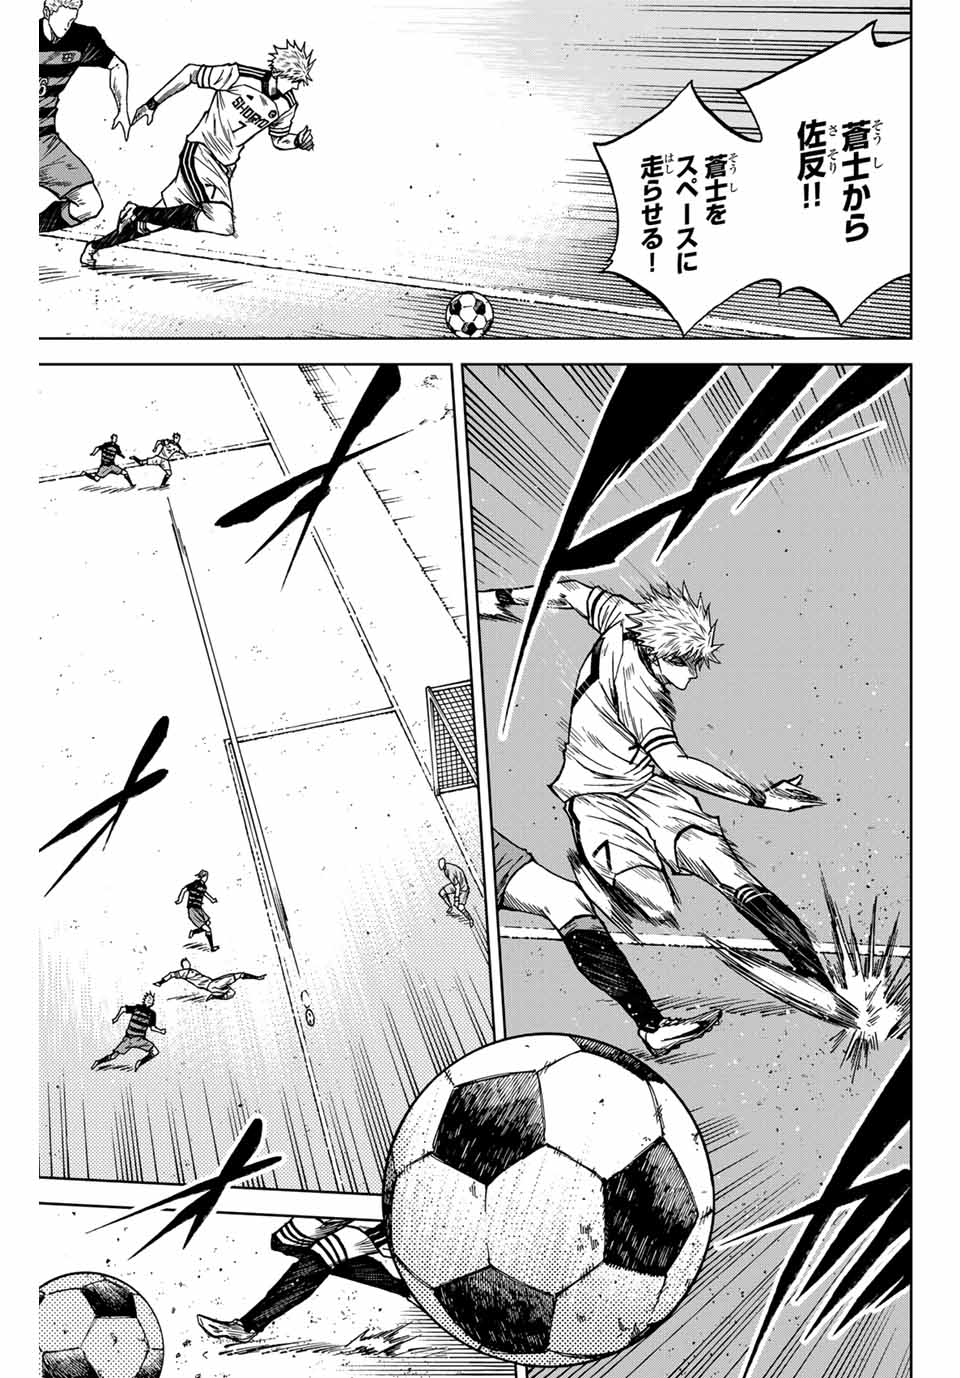 Aoku Somero - Chapter 119 - Page 3